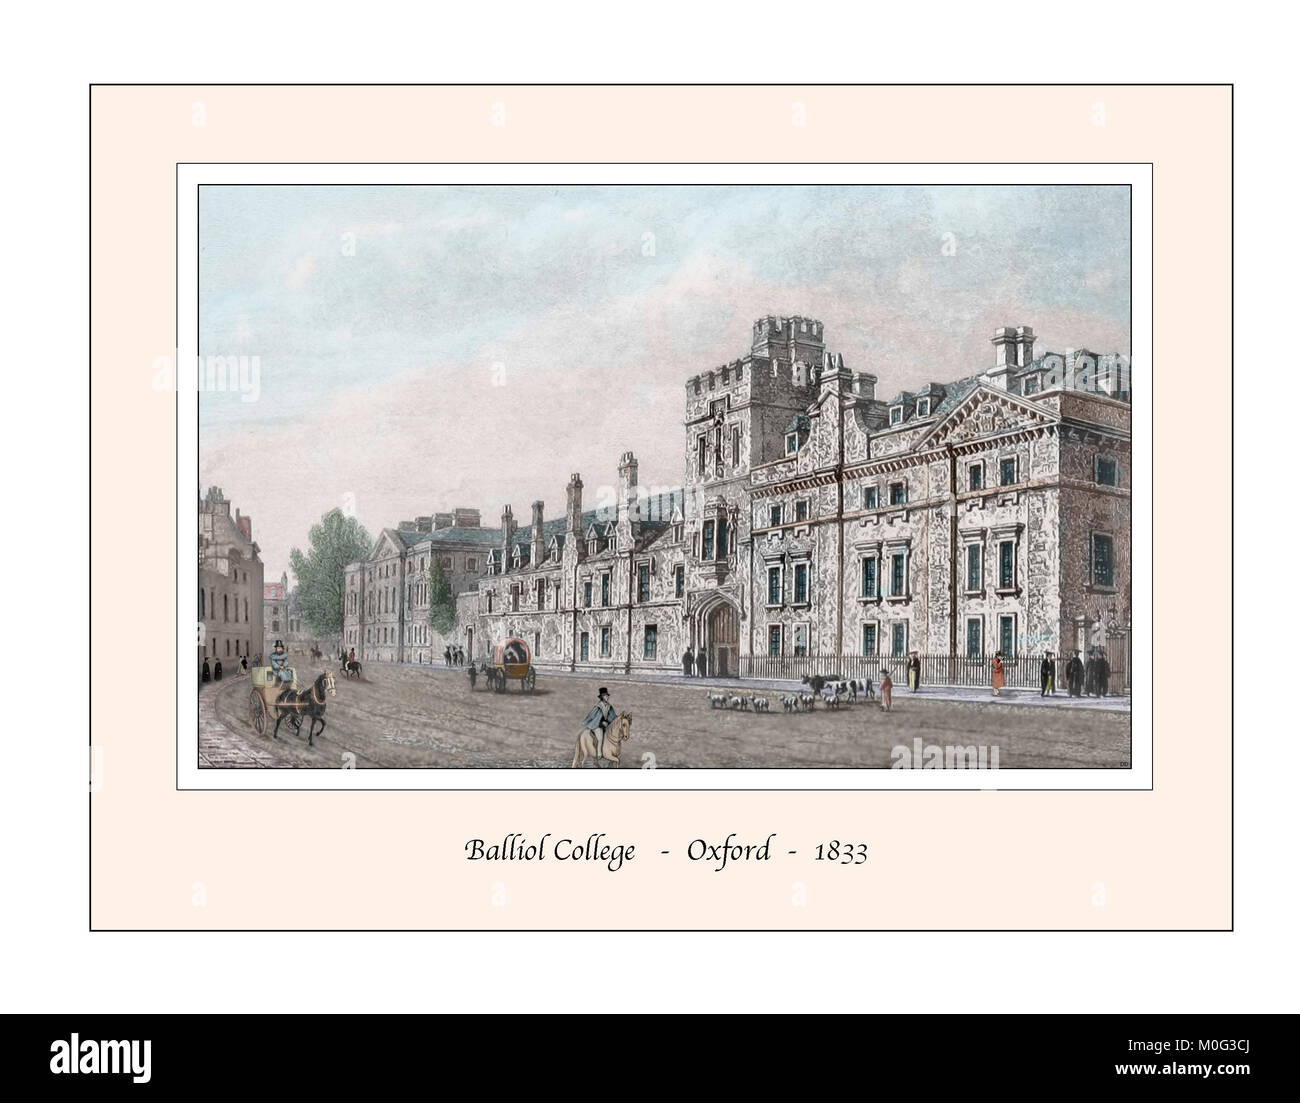 Balliol College Oxford Original Design based on a 19th century Engraving Stock Photo